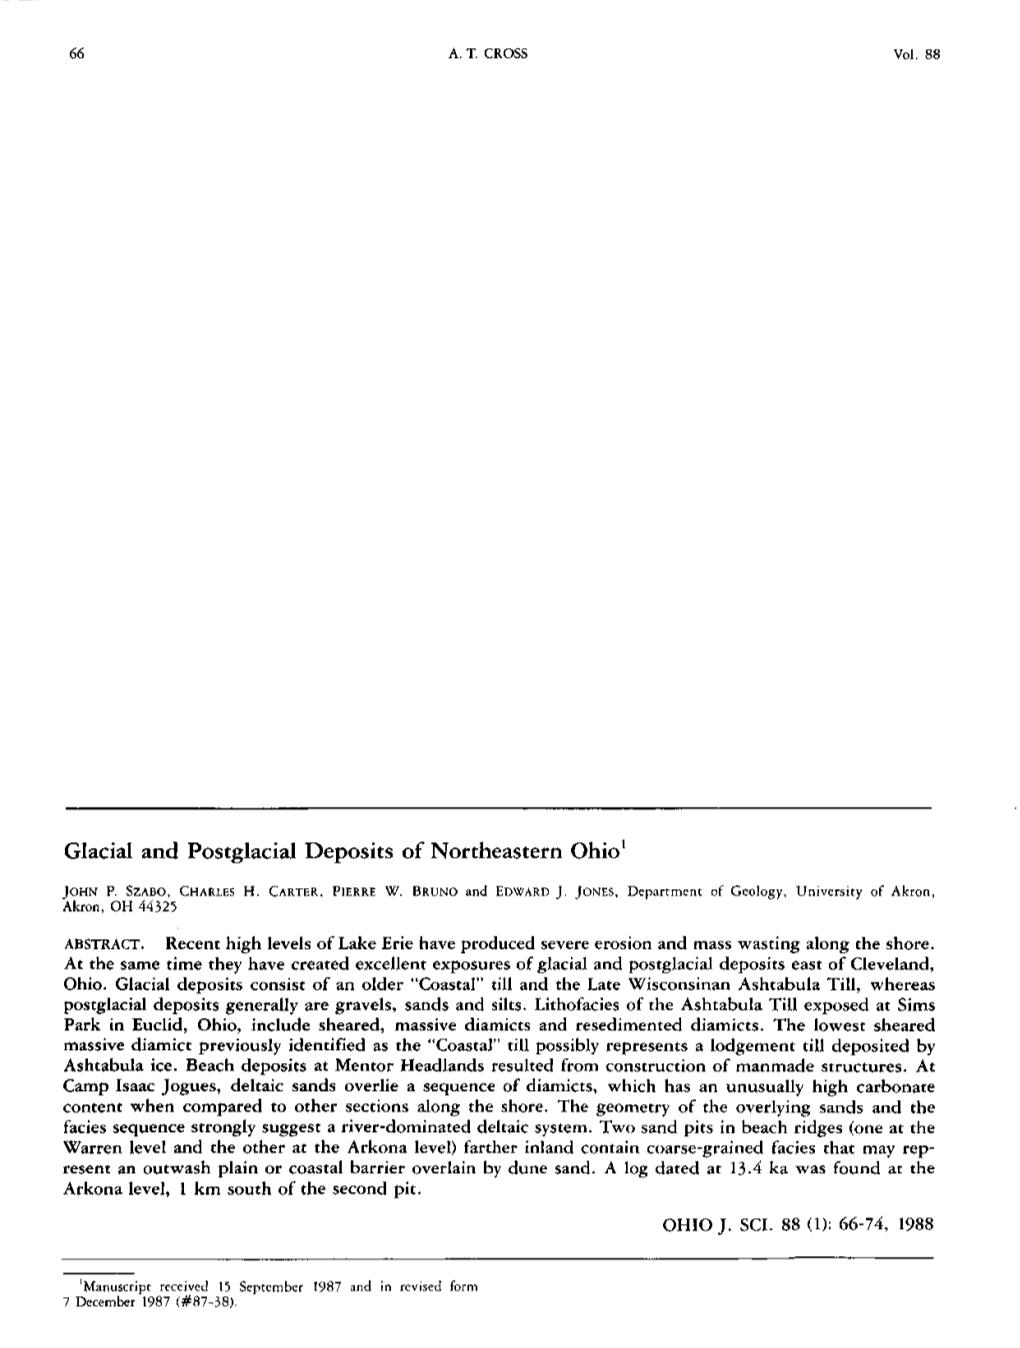 Glacial and Postglacial Deposits of Northeastern Ohio1